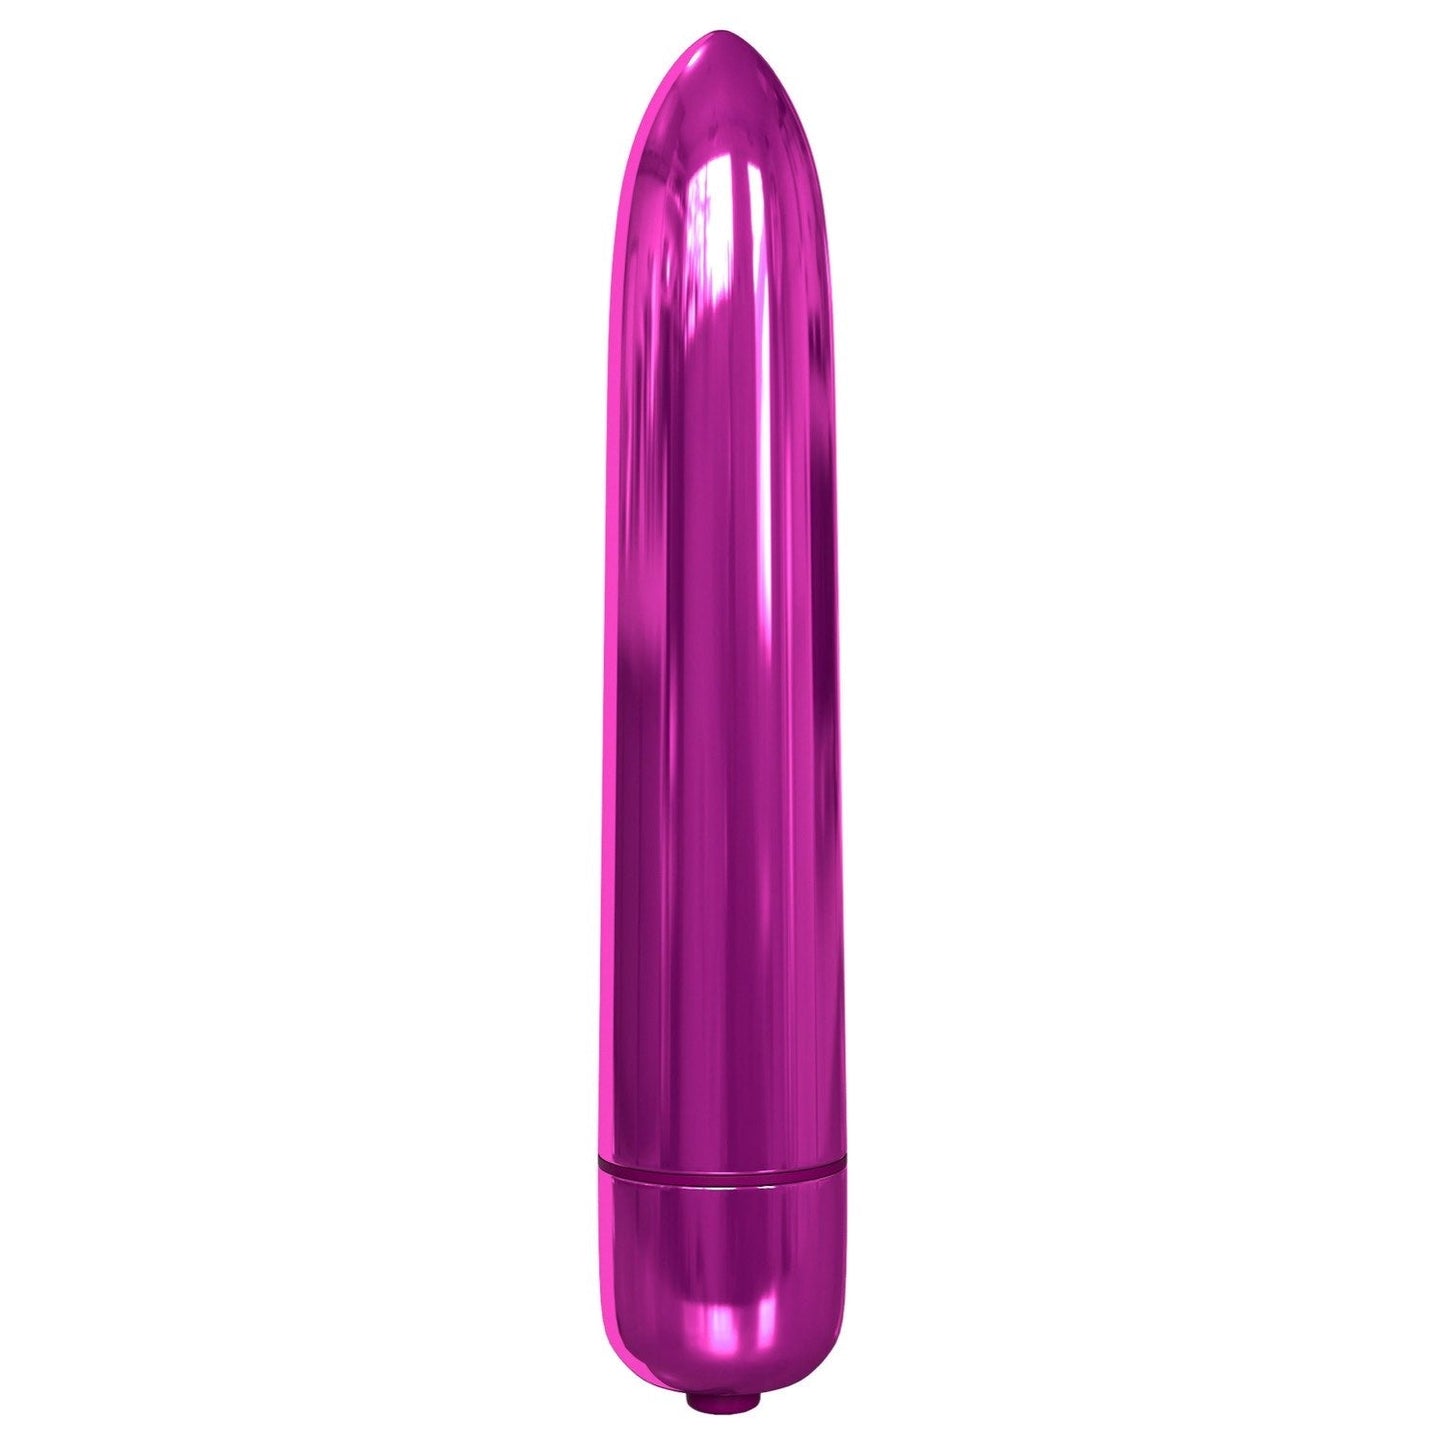 Rocket Bullet - Metallic Pink 8.9 cm Bullet